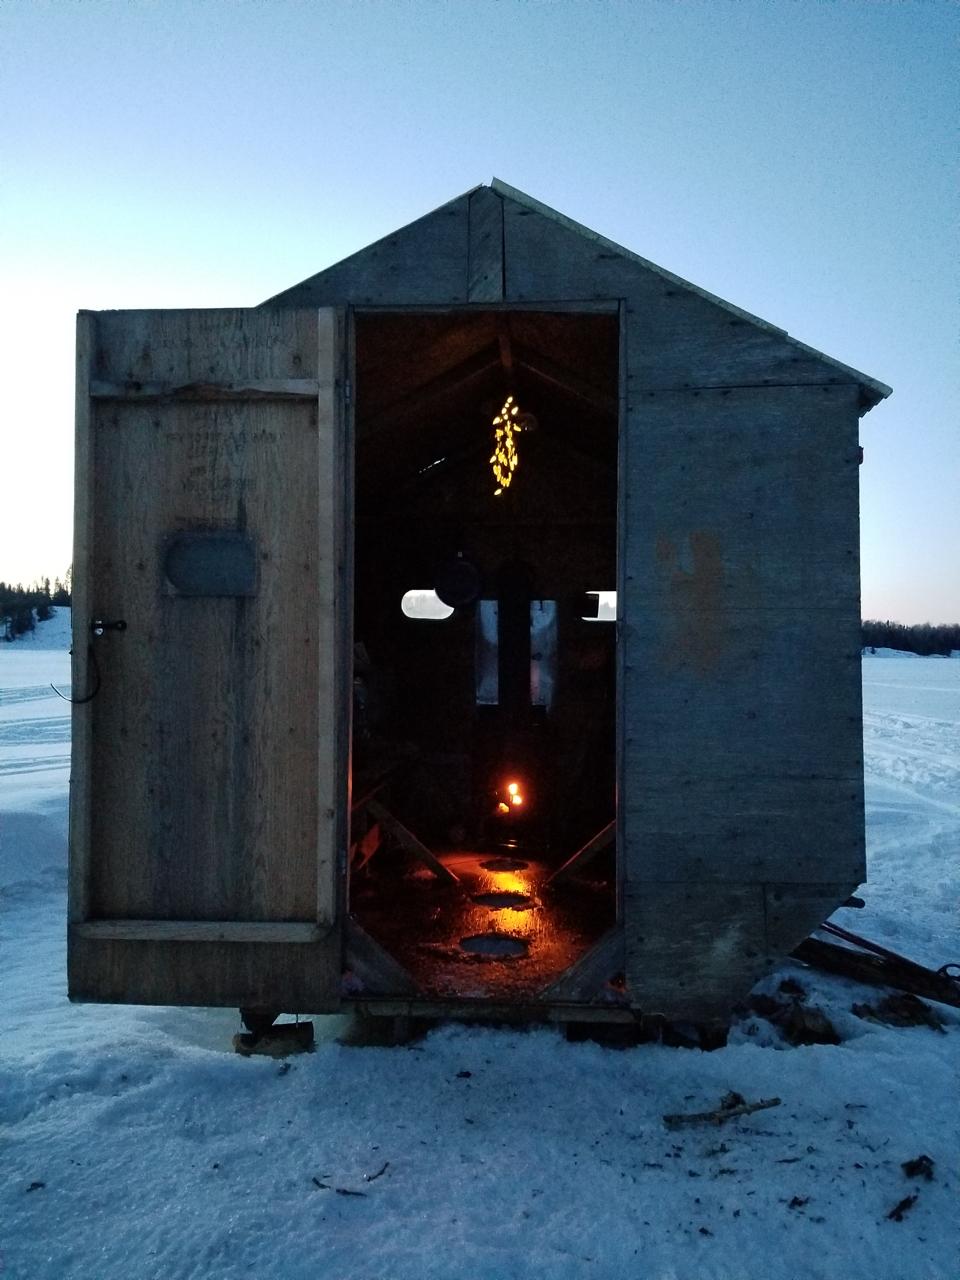 Ice shacks keep you warm while ice fishing